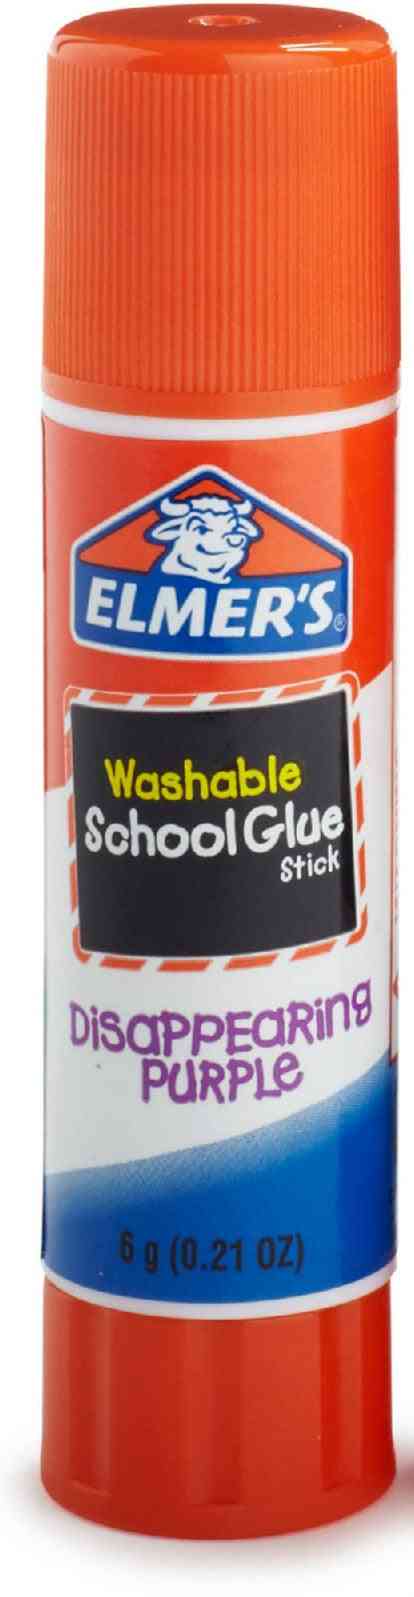 Elmers Elmer's Disappearing Purple School Glue Sticks